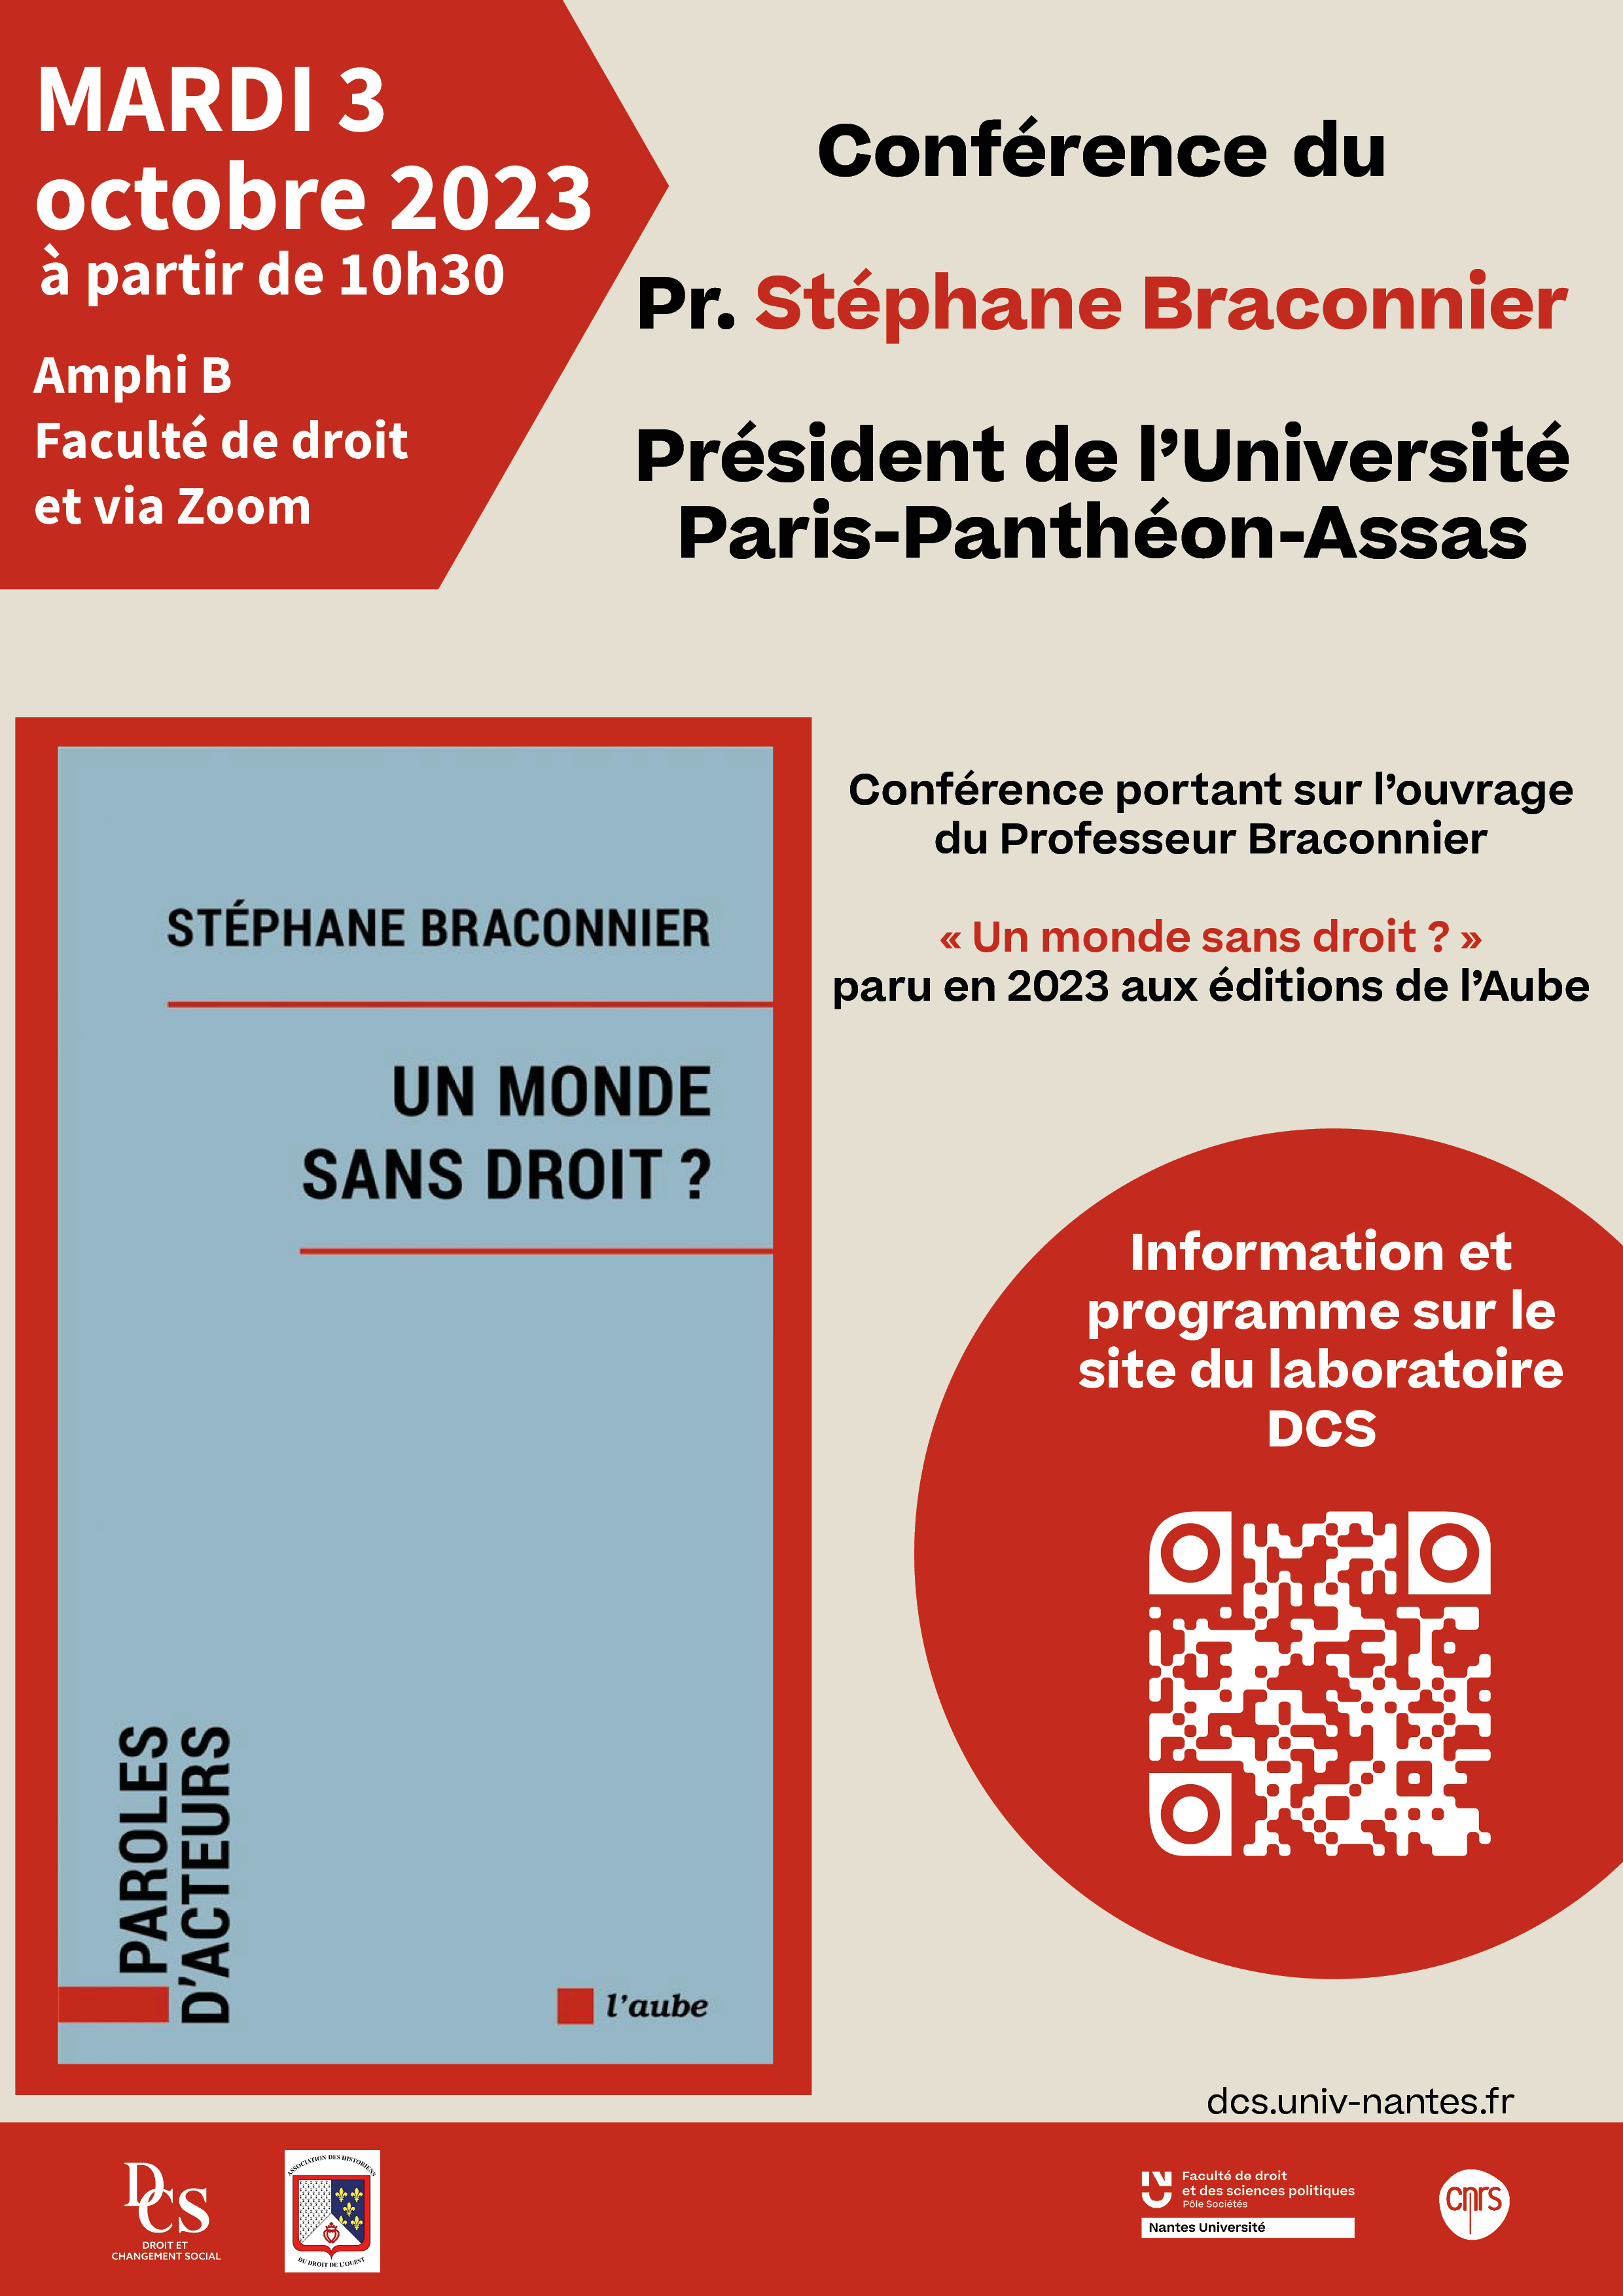 Conférence du Pr. Braconnier